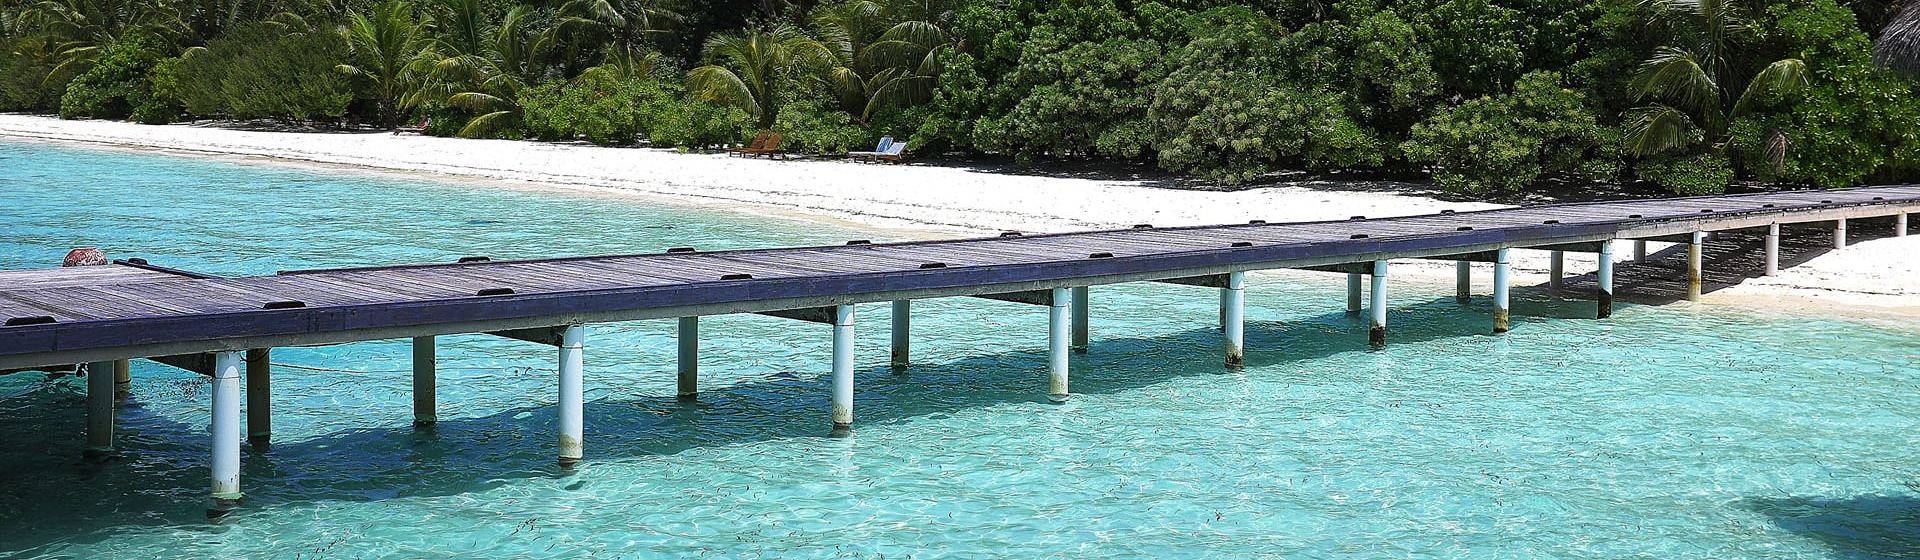 Holidays to Meemu Atoll Image